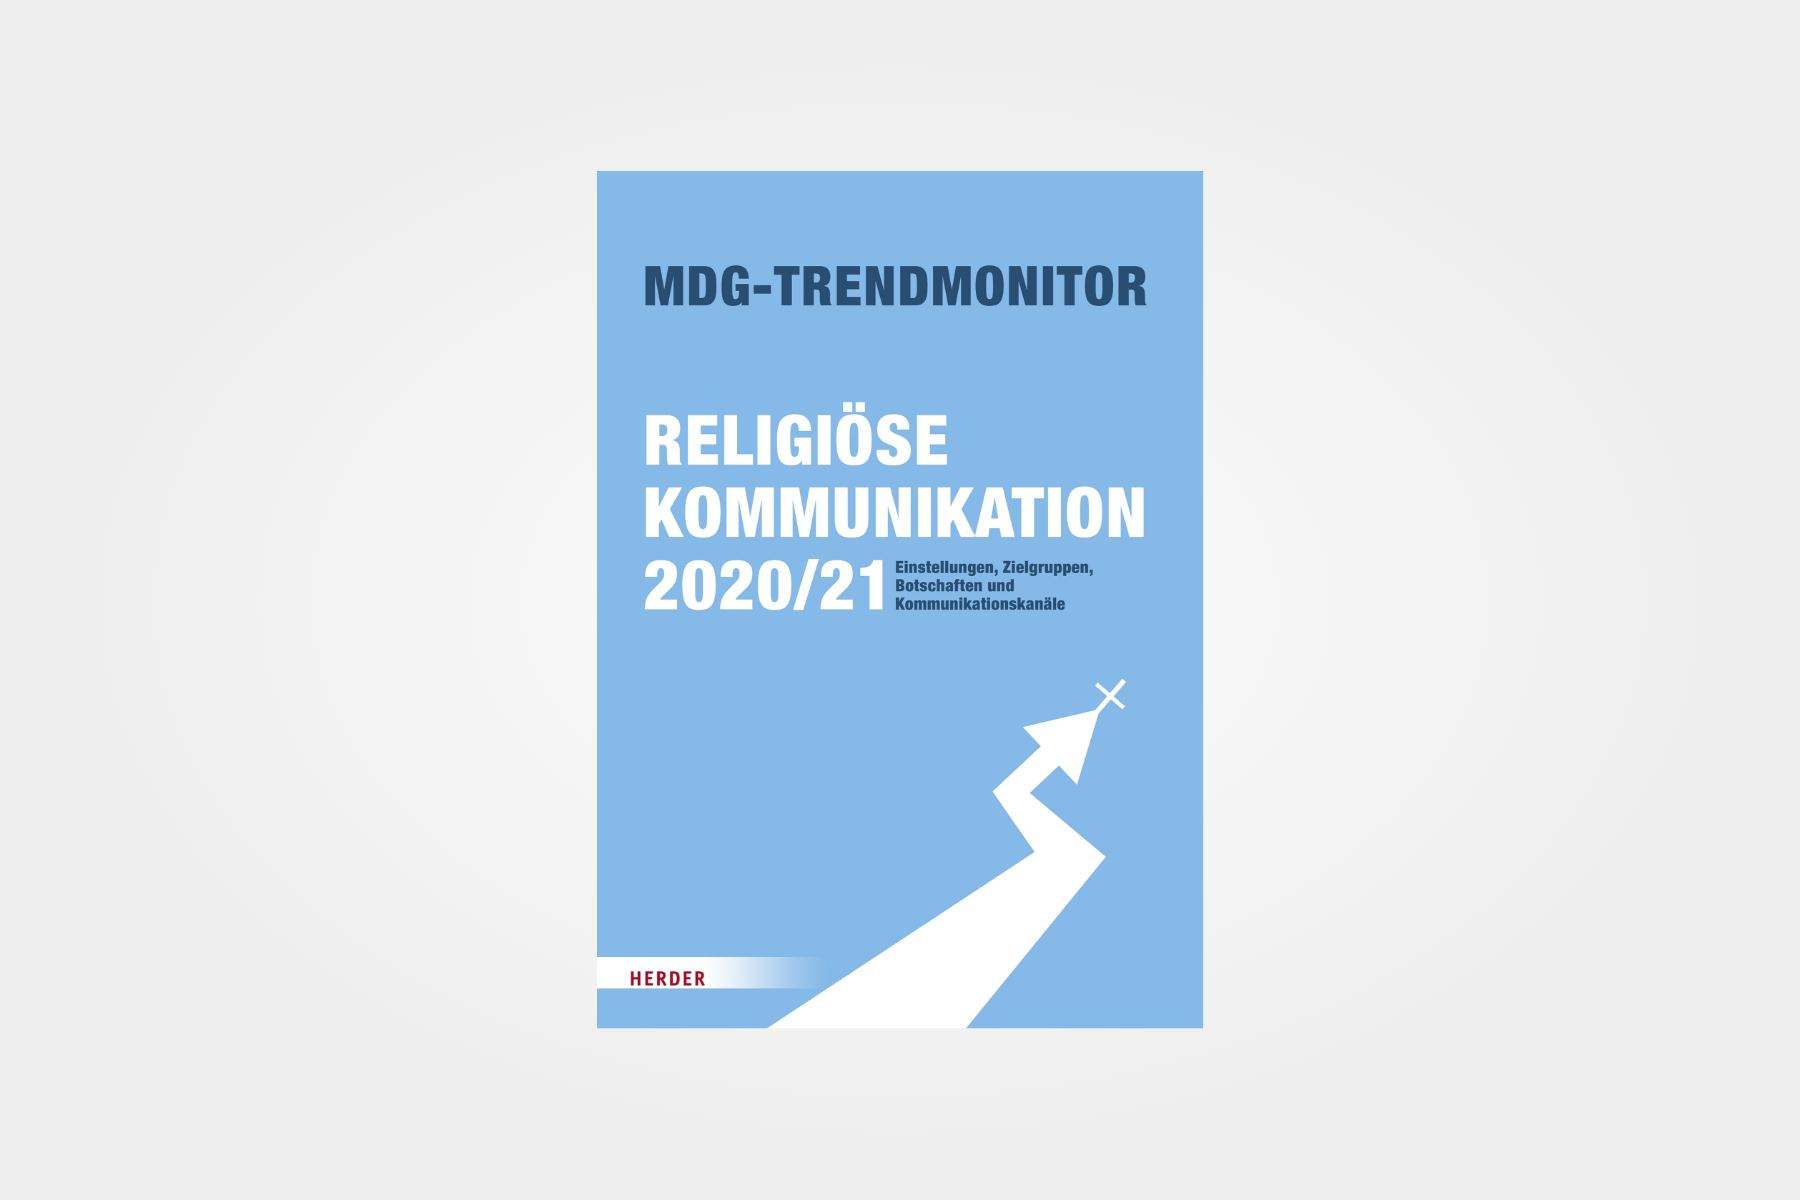 MDG Trend Monitor – Religious Communication 2020/21